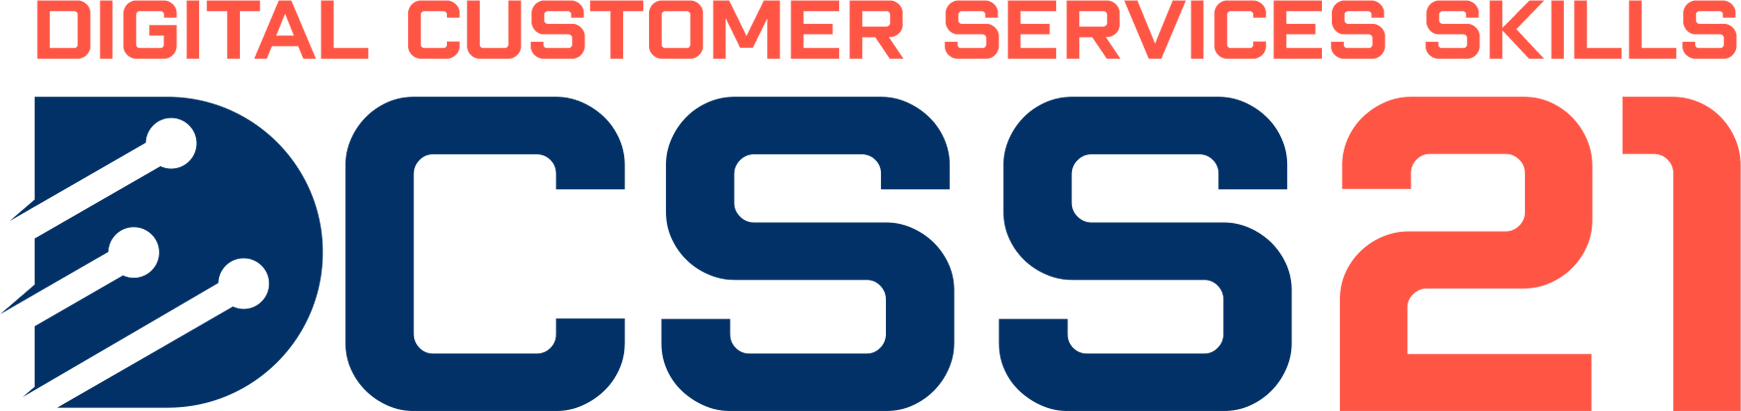 DCSS21-logo